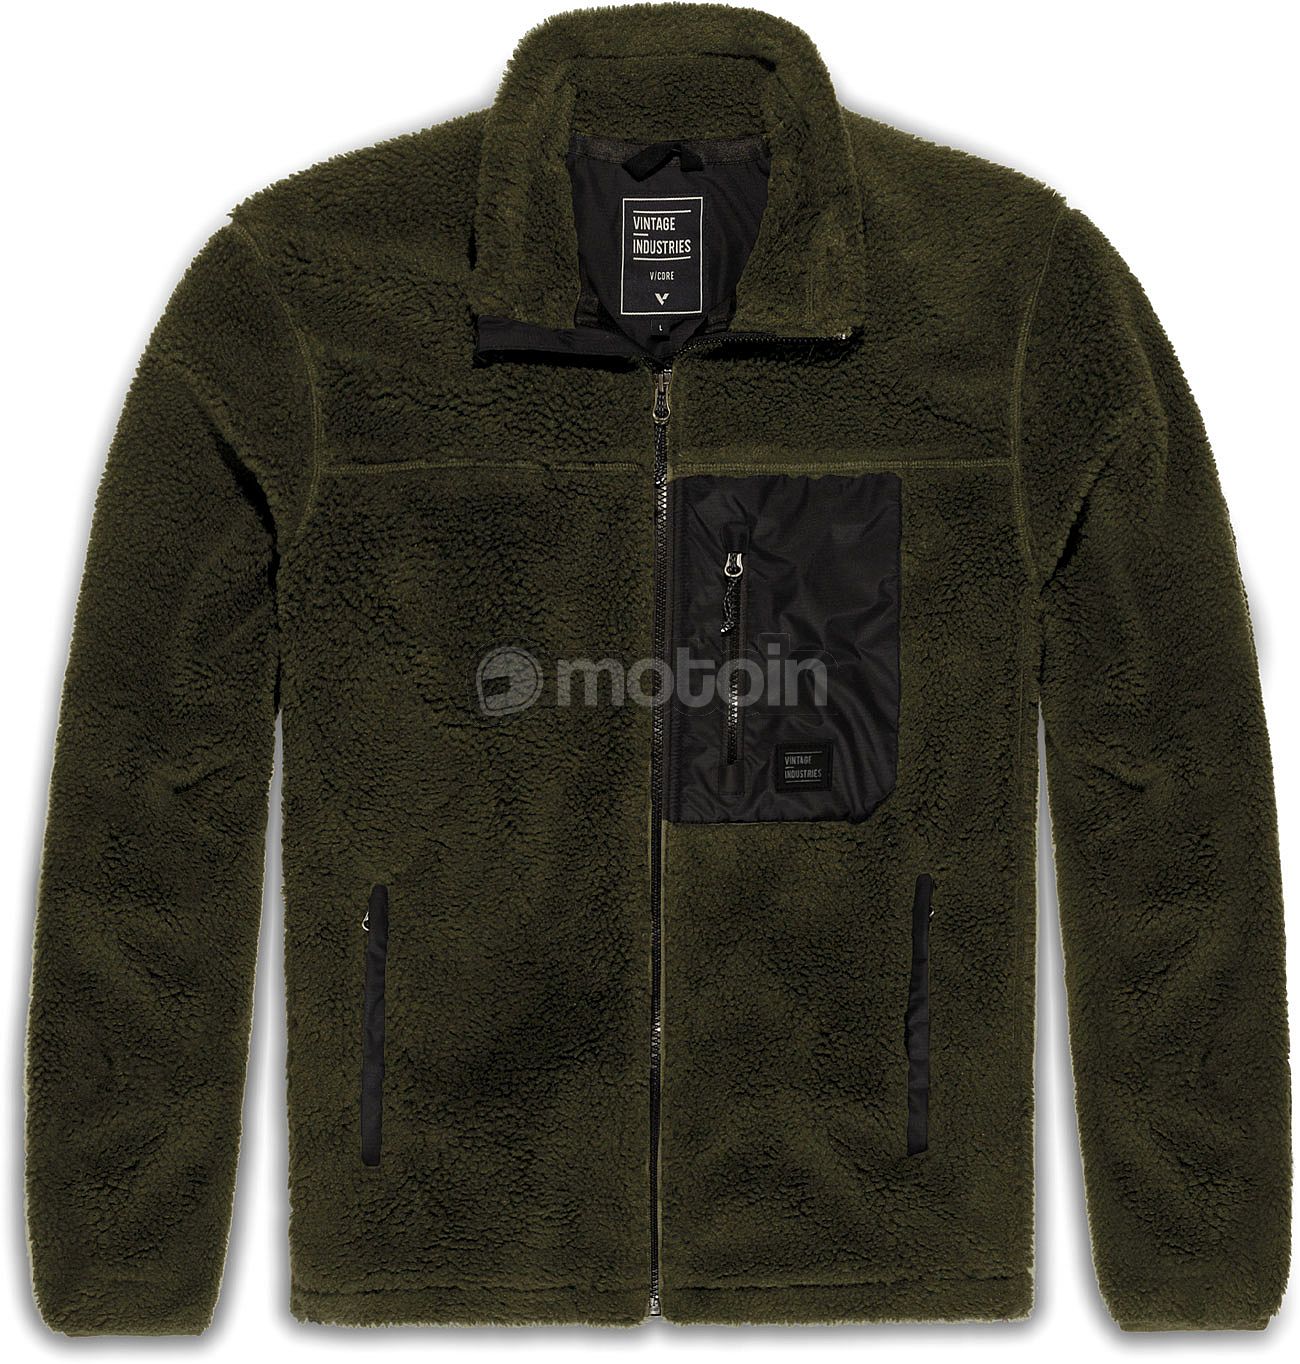 Vintage Industries Kodi Sherpa, флисовая куртка